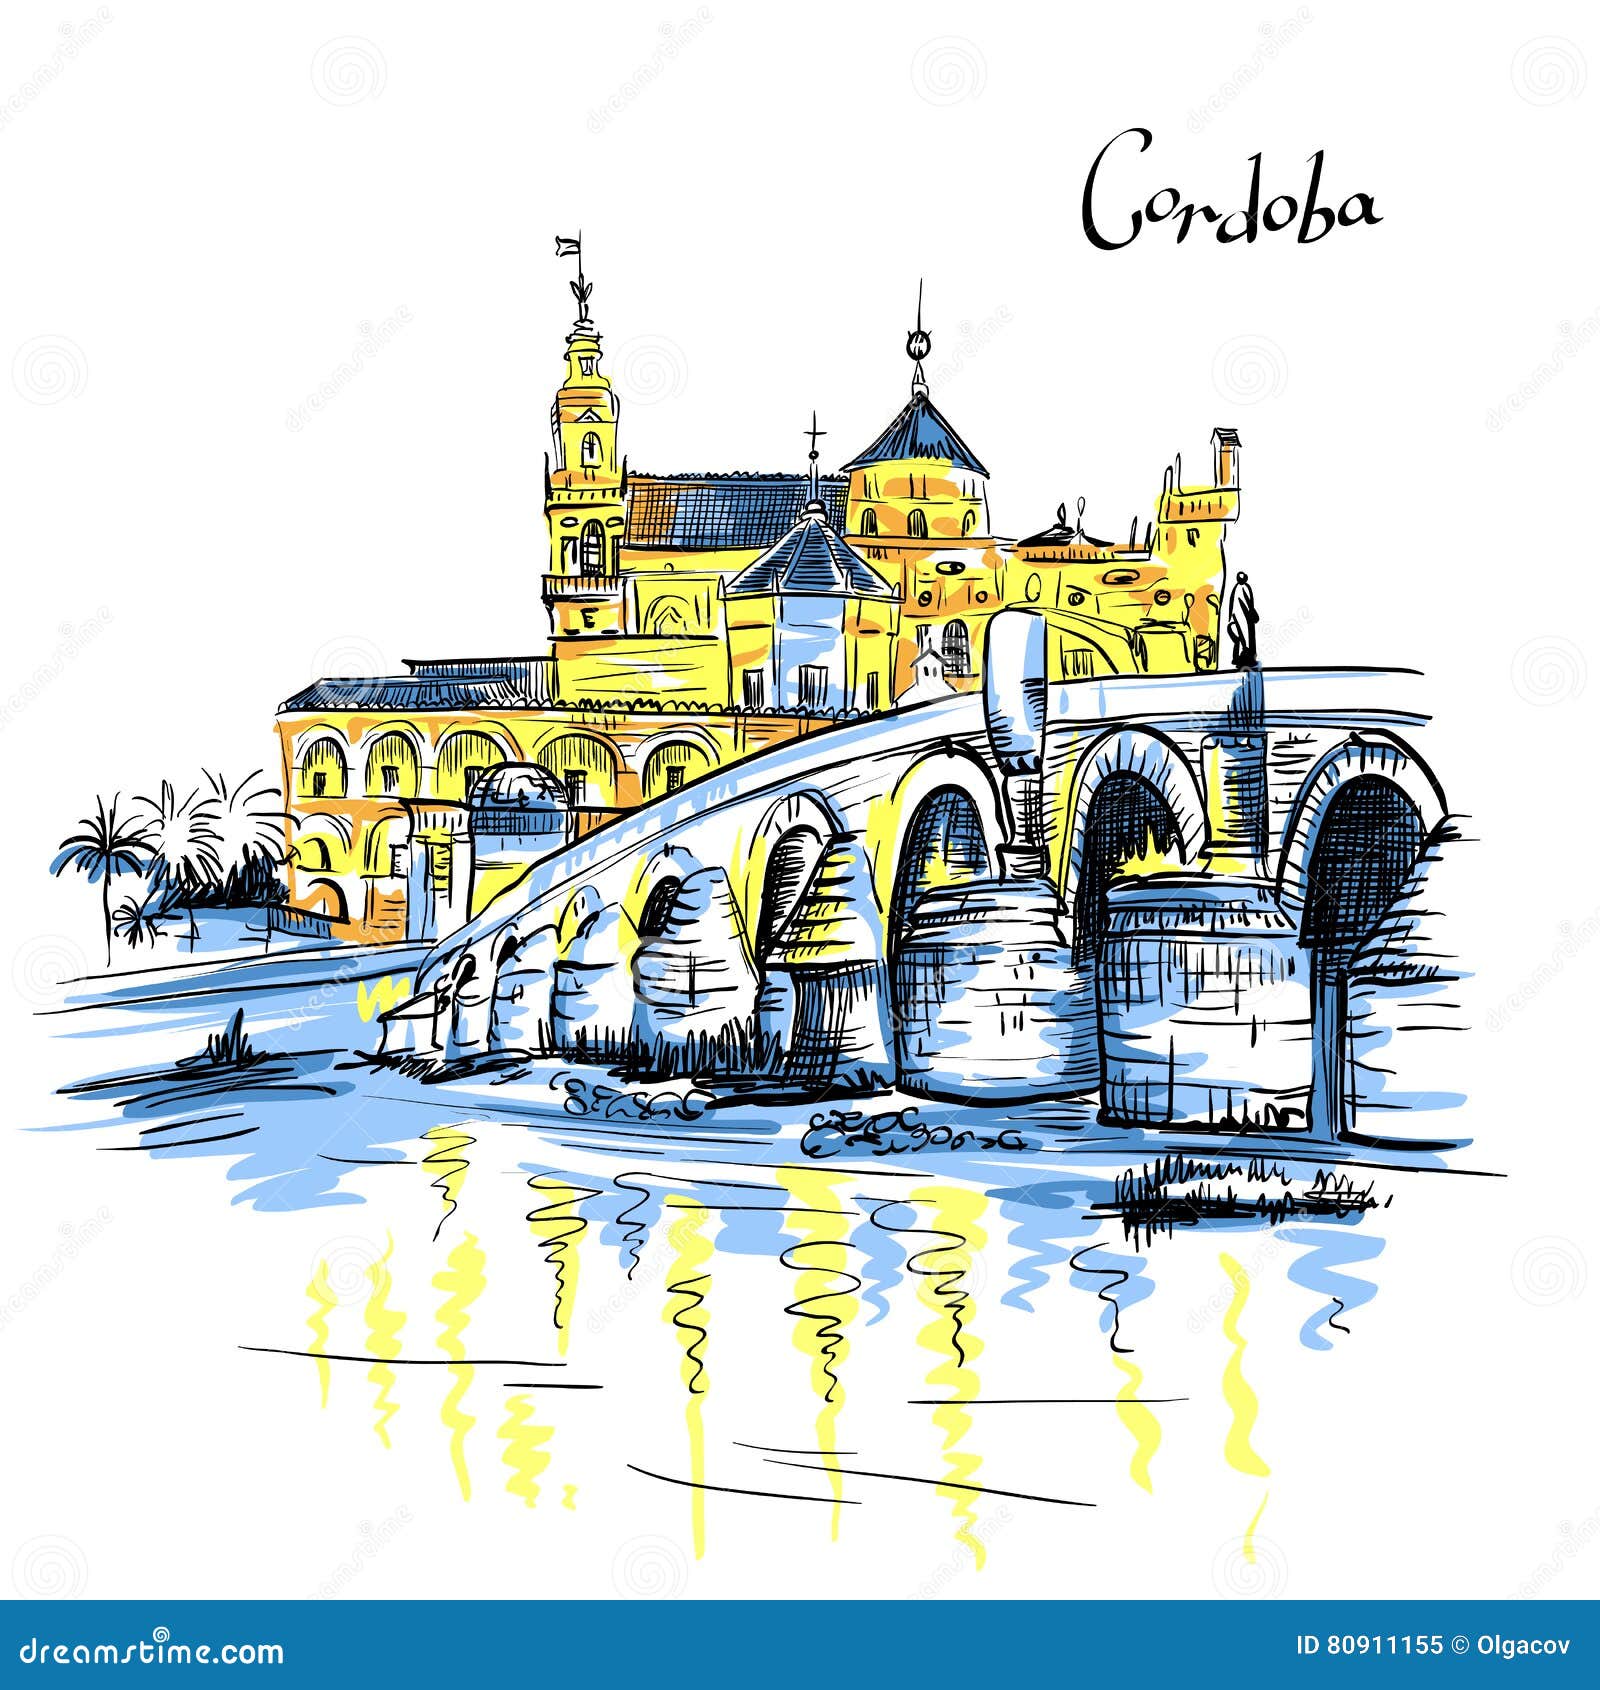  mezquita and roman bridge in cordoba, spain